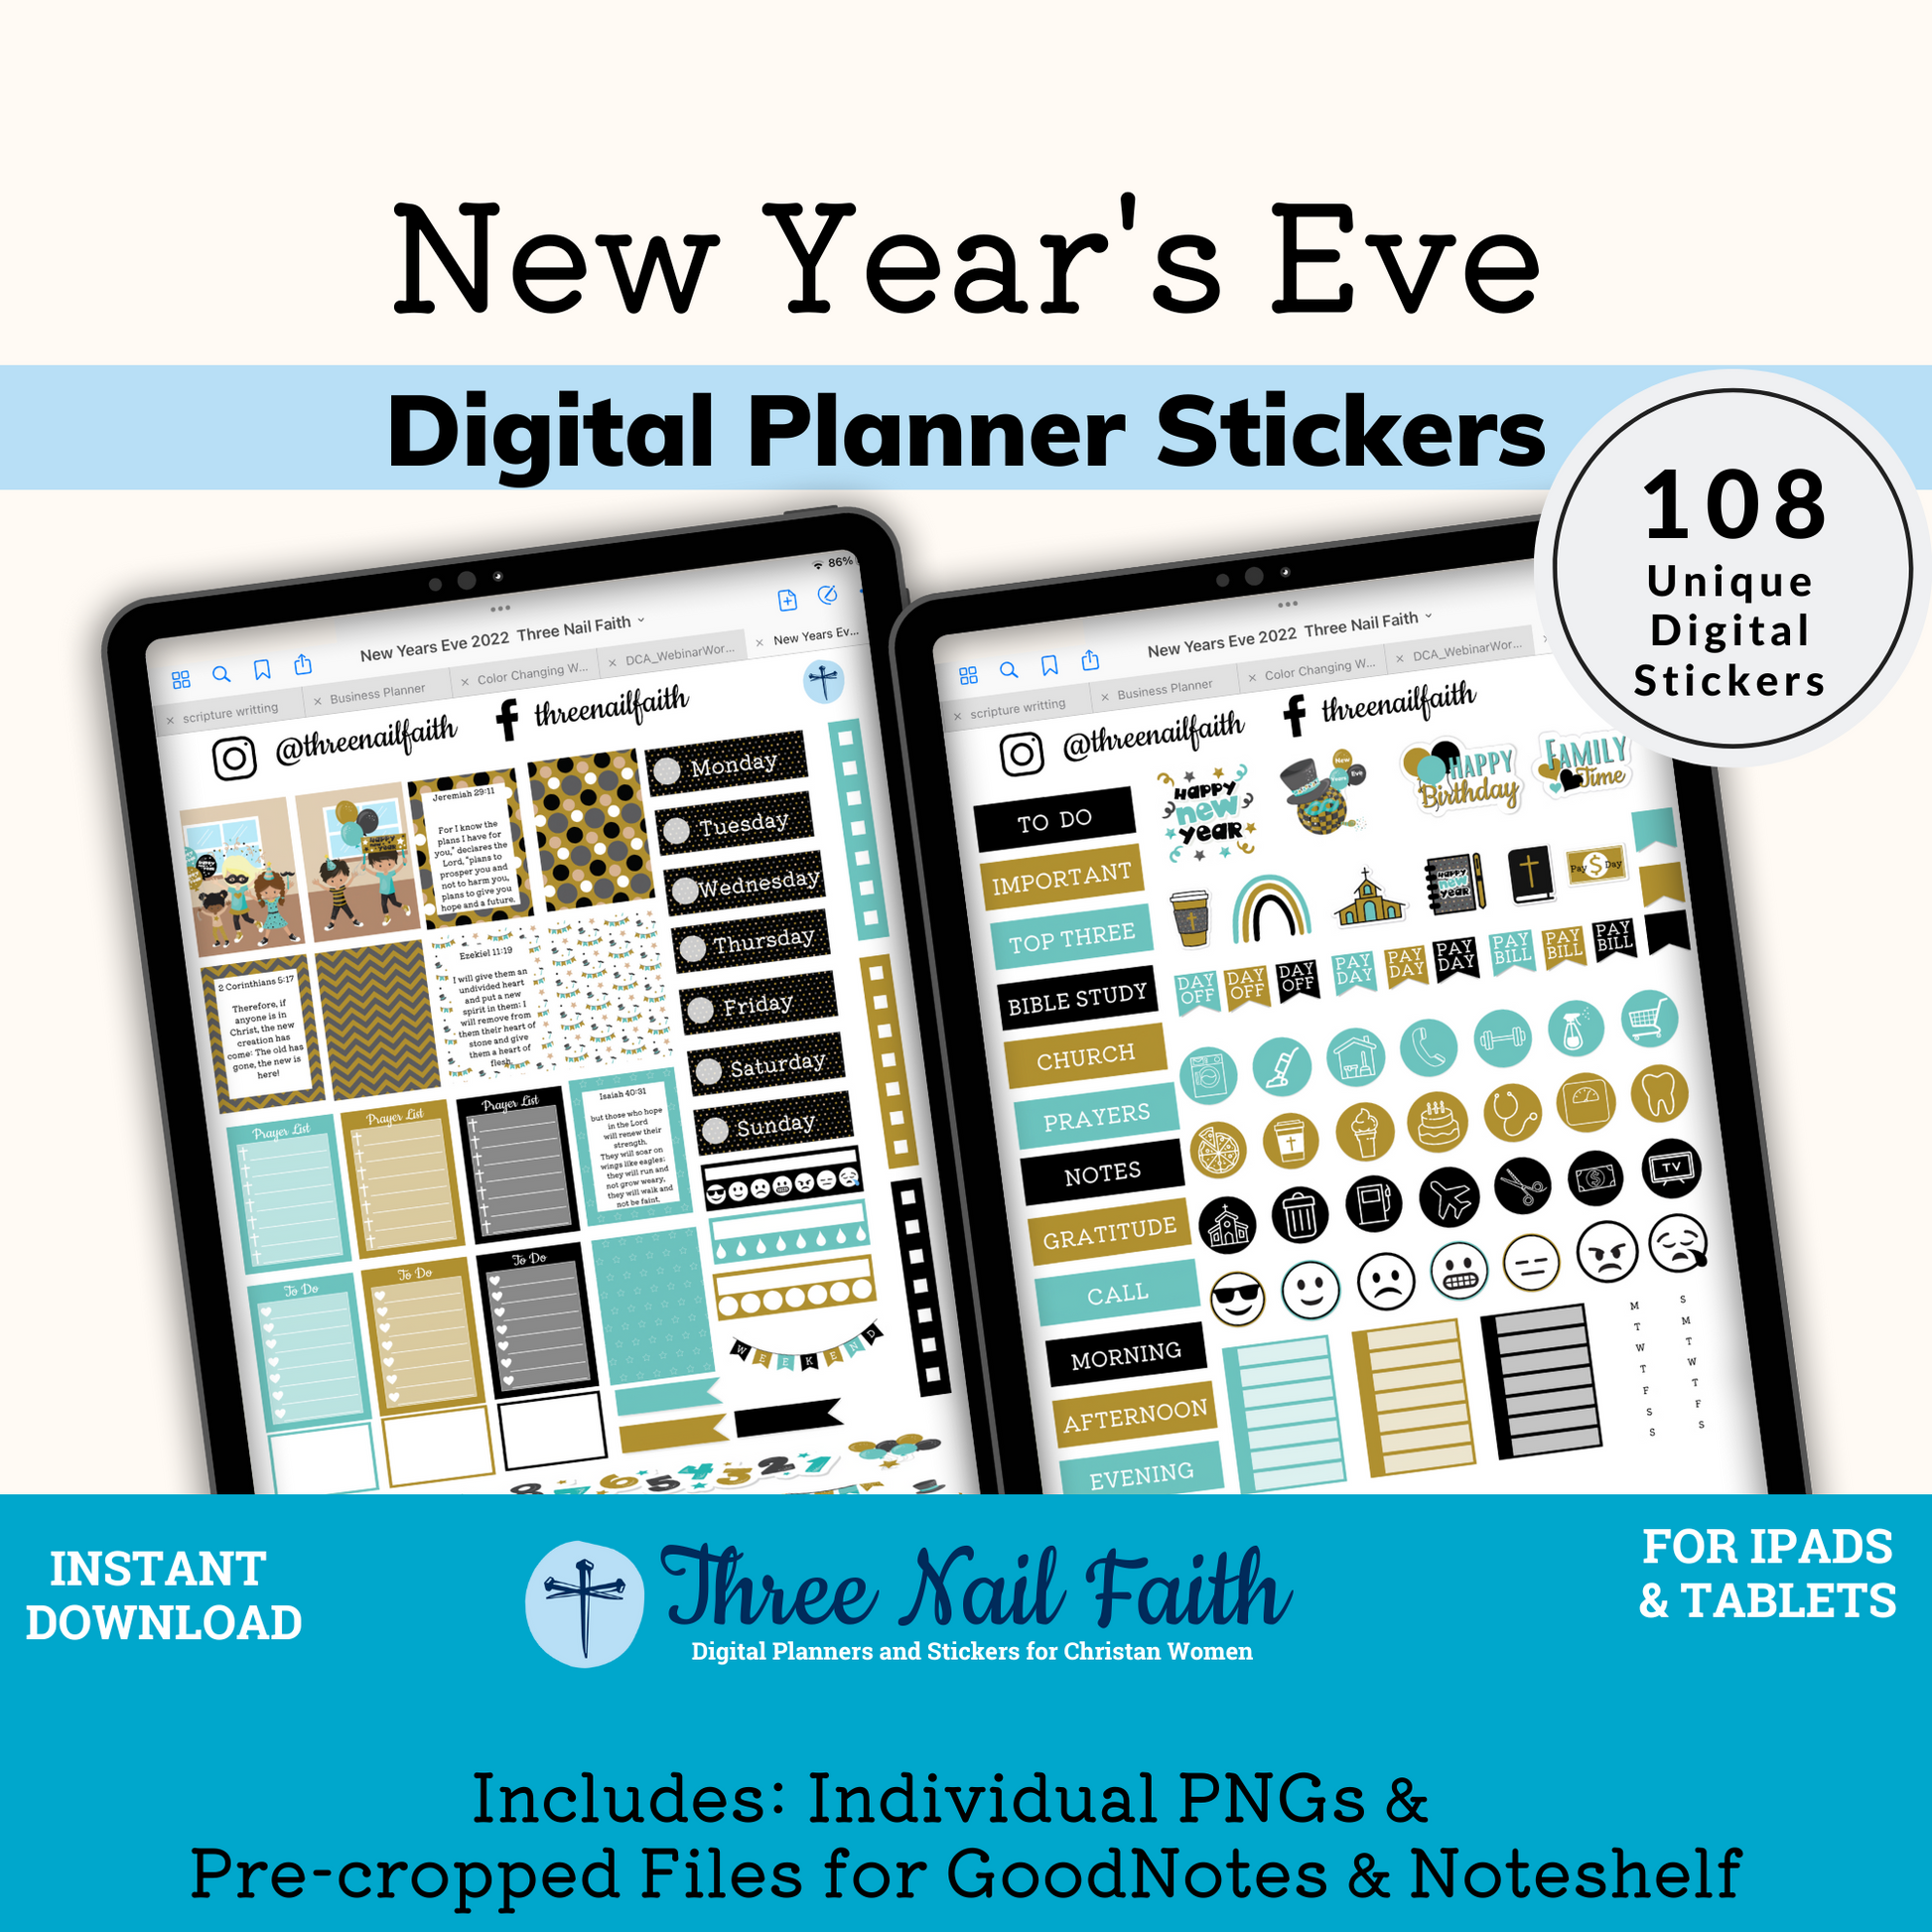 New Years Eve digital sticker kit with 108 Digital stickers